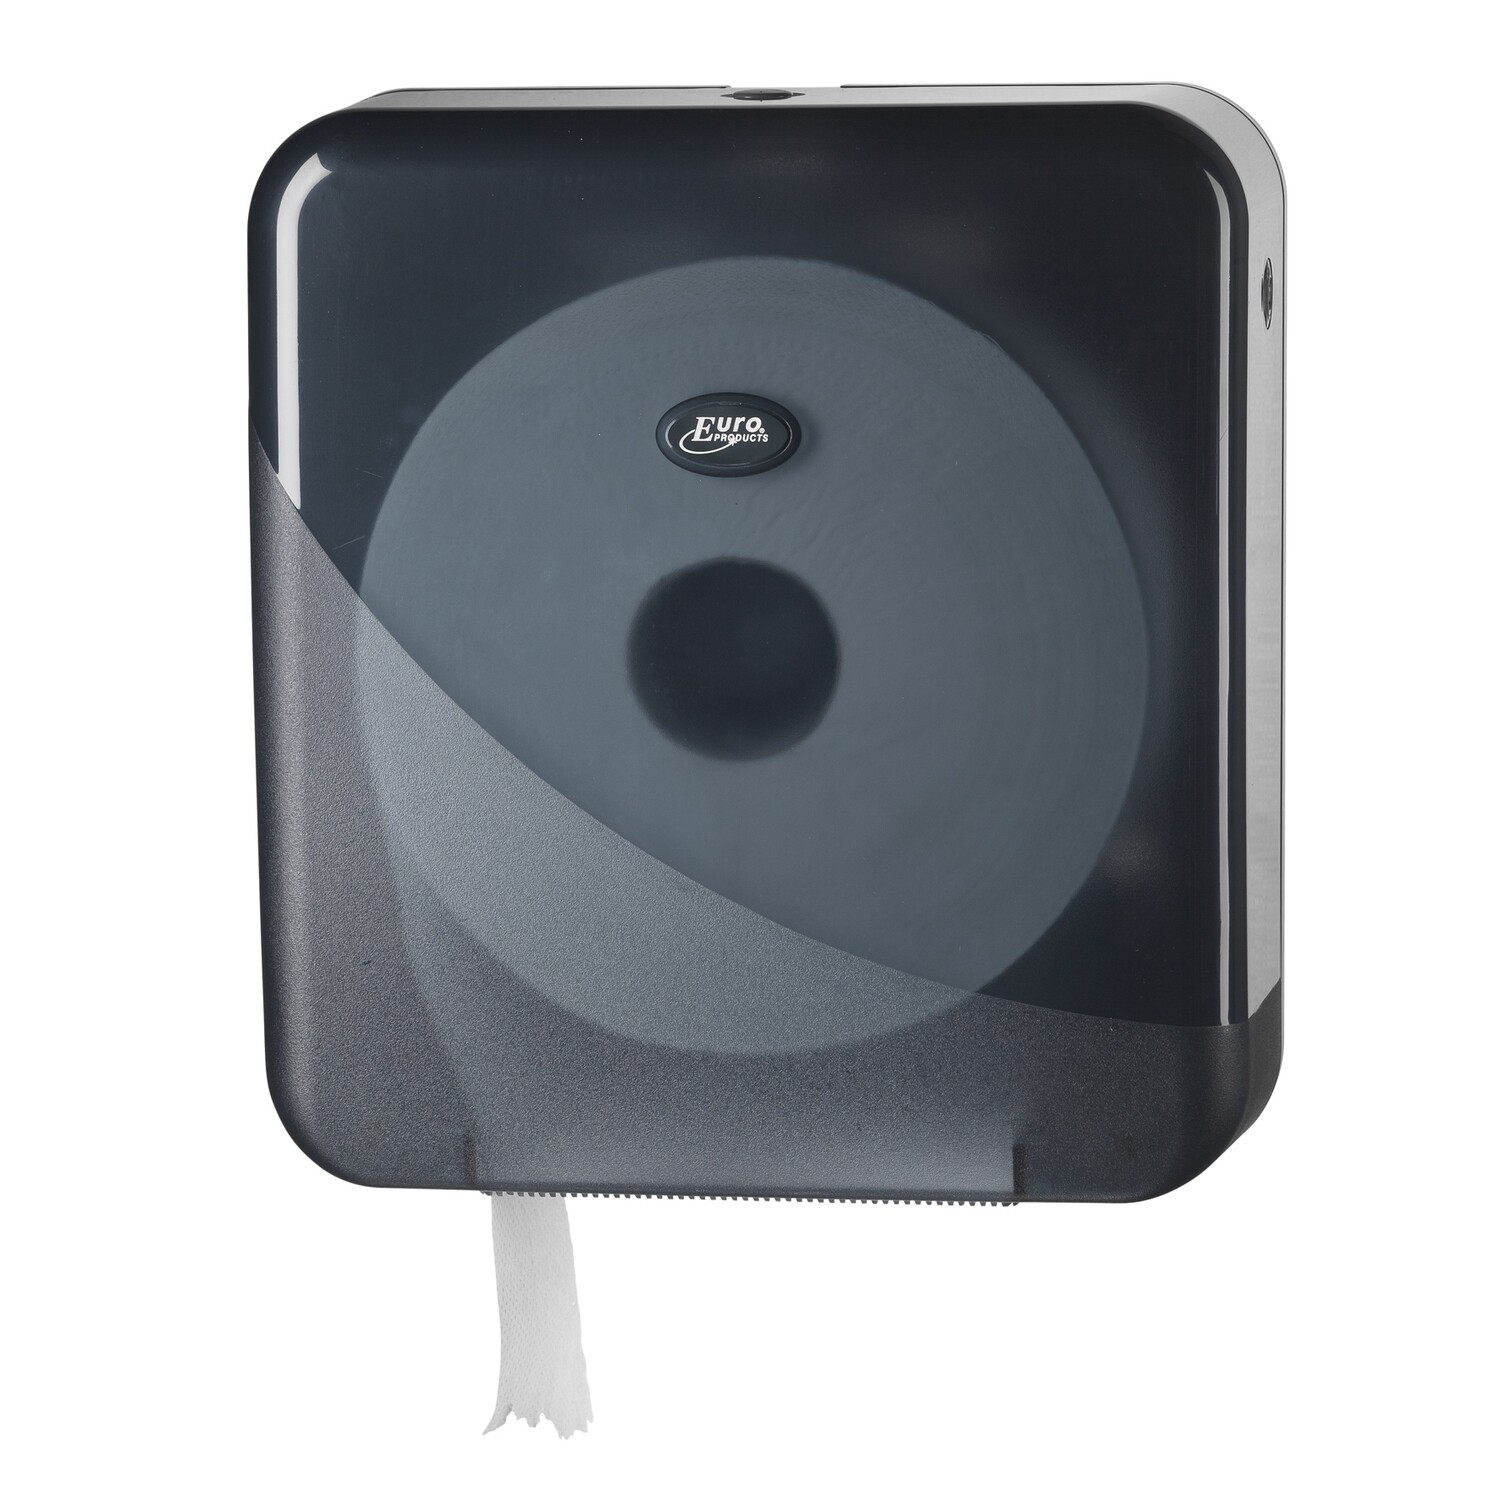 Euro Pearl Black jumbo maxi toiletrolhouder, verpakt per stuk